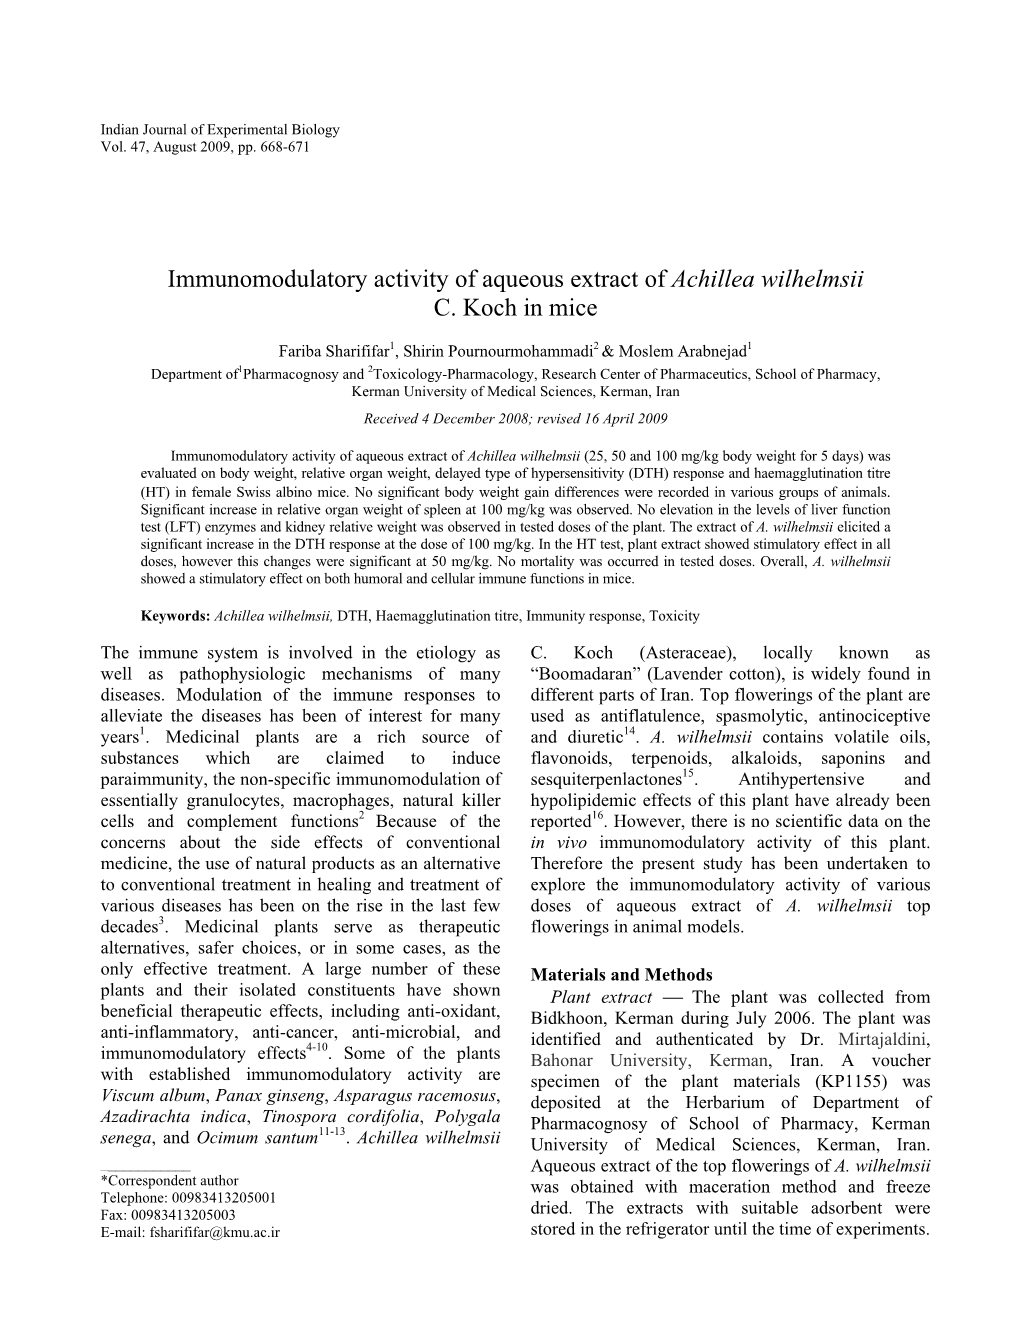 Immunomodulatory Activity of Aqueous Extract of Achillea Wilhelmsii C